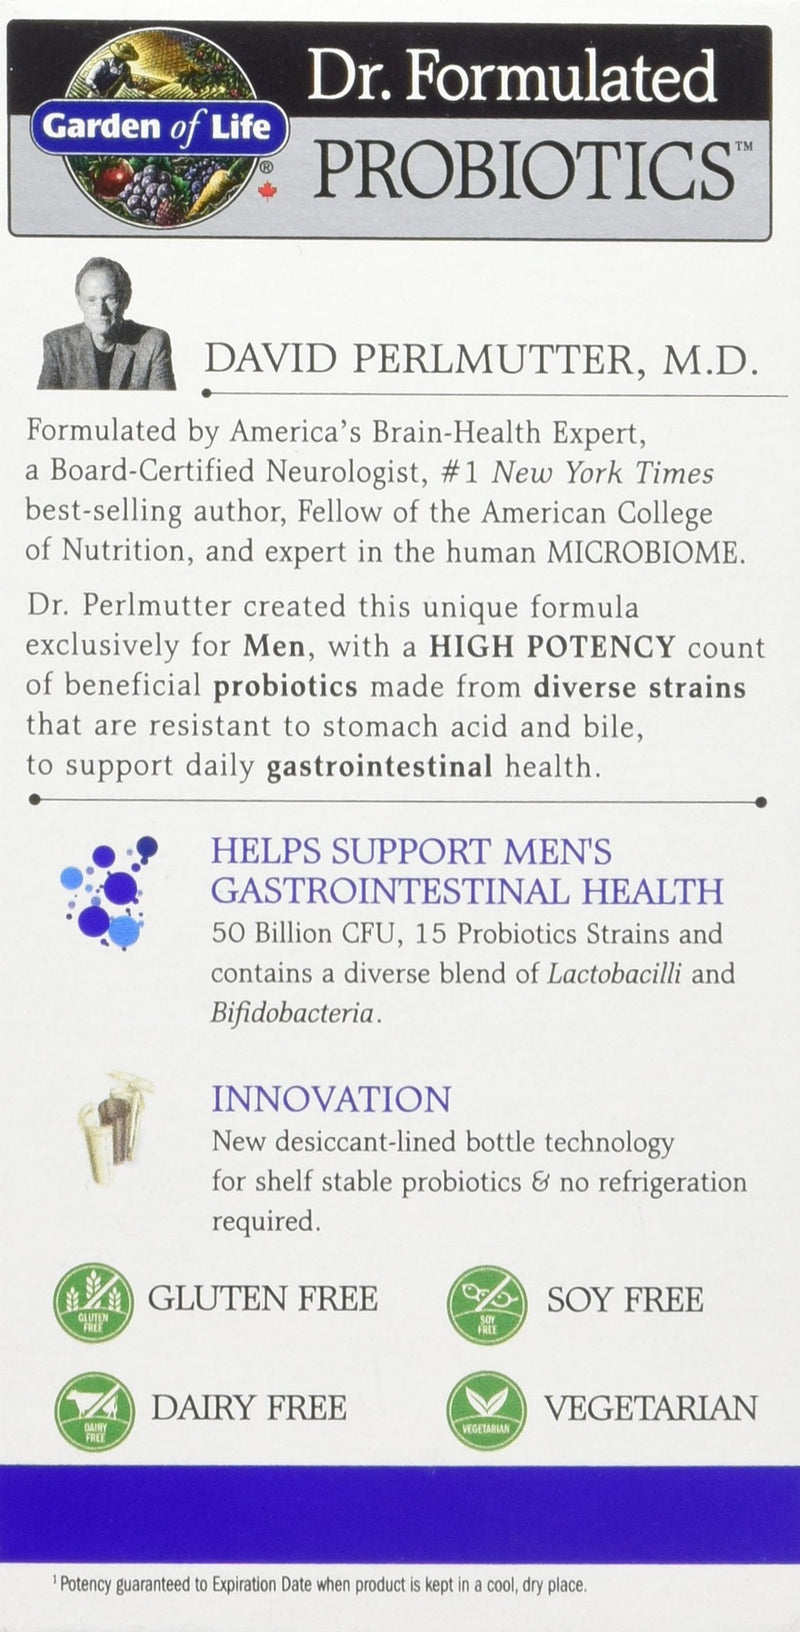 Garden of Life Dr. Formulated Once Daily Men 50-Billion Probiotics 30 Vegetarian Capsules - BeesActive Australia